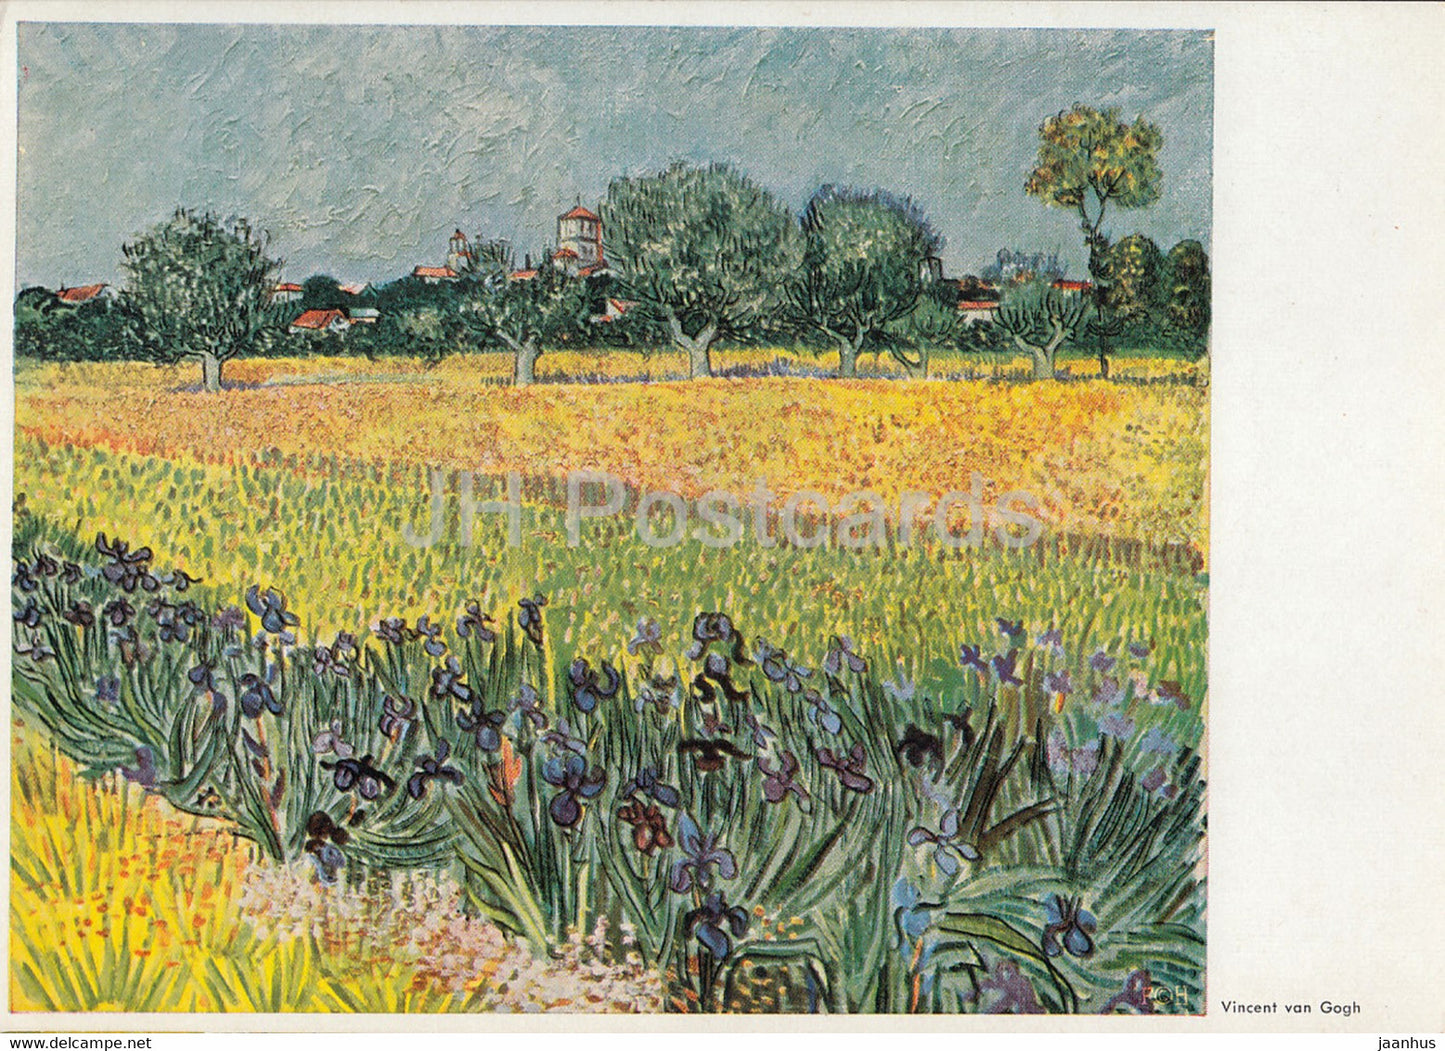 painting by Vincent van Gogh - Blick auf Arles mit Iris - View of Arles with Irises - Dutch art - Germany - unused - JH Postcards